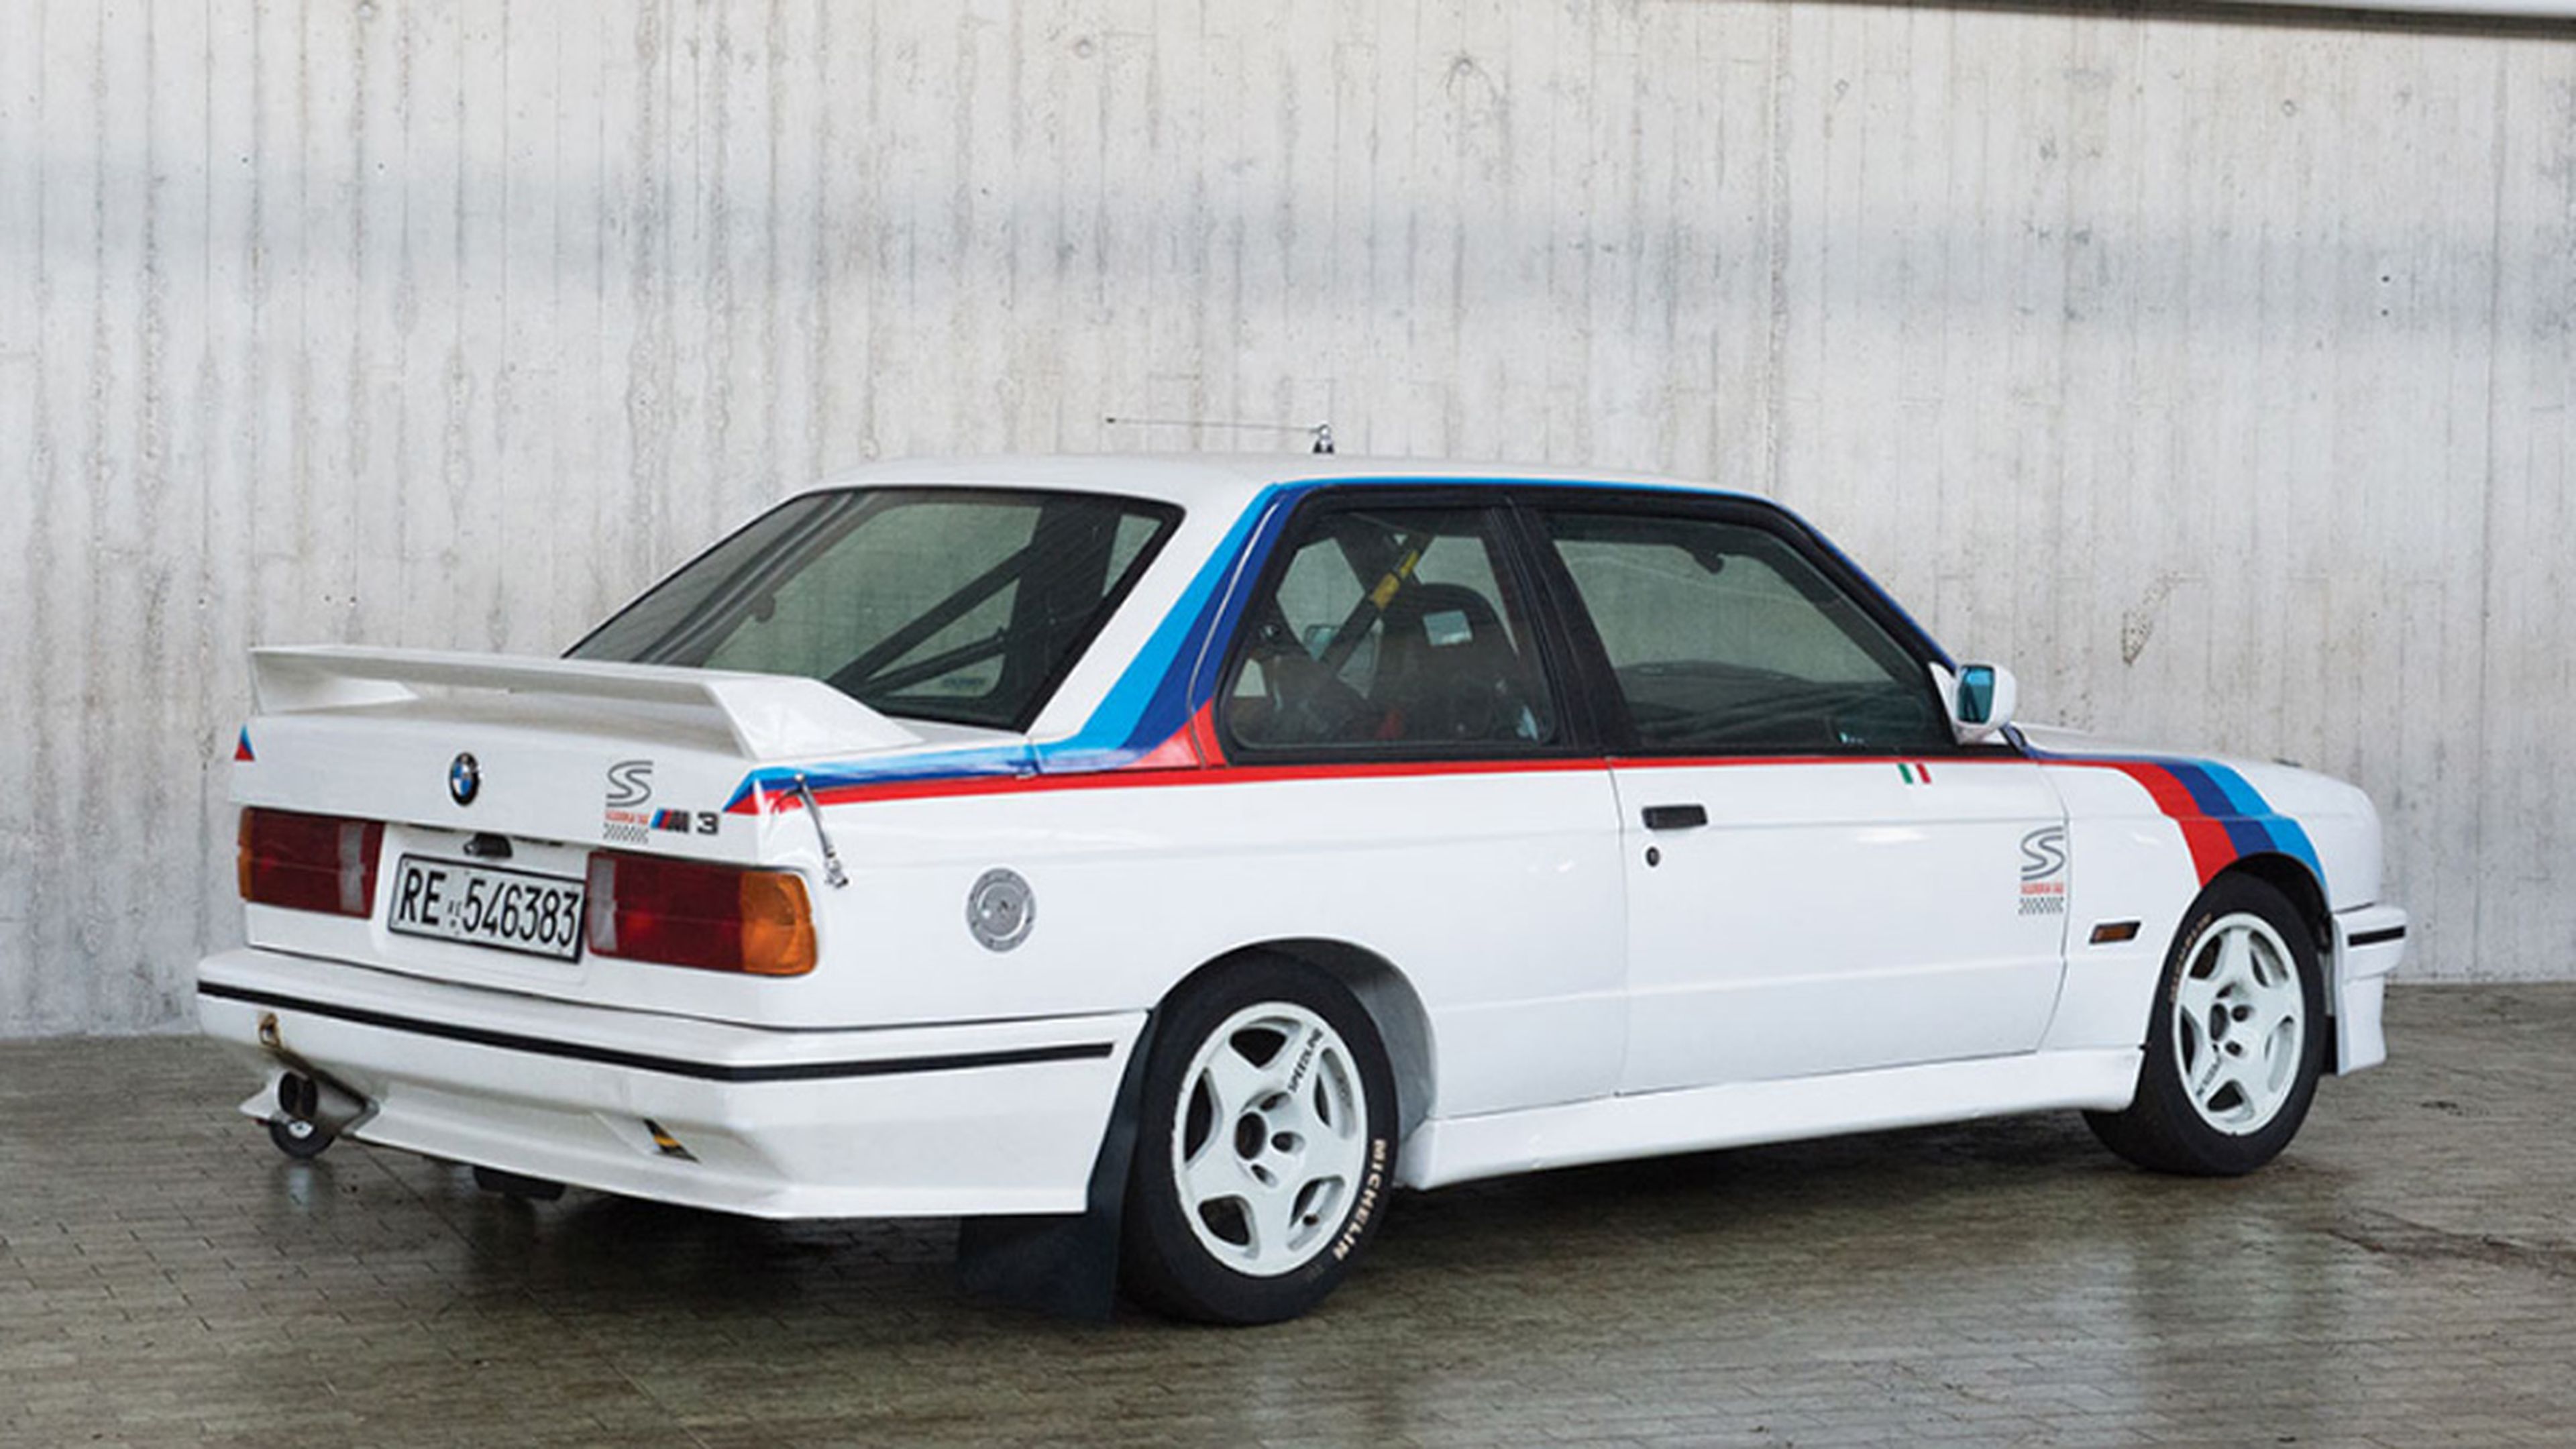 BMW M3 E30 RM Sotheby’s